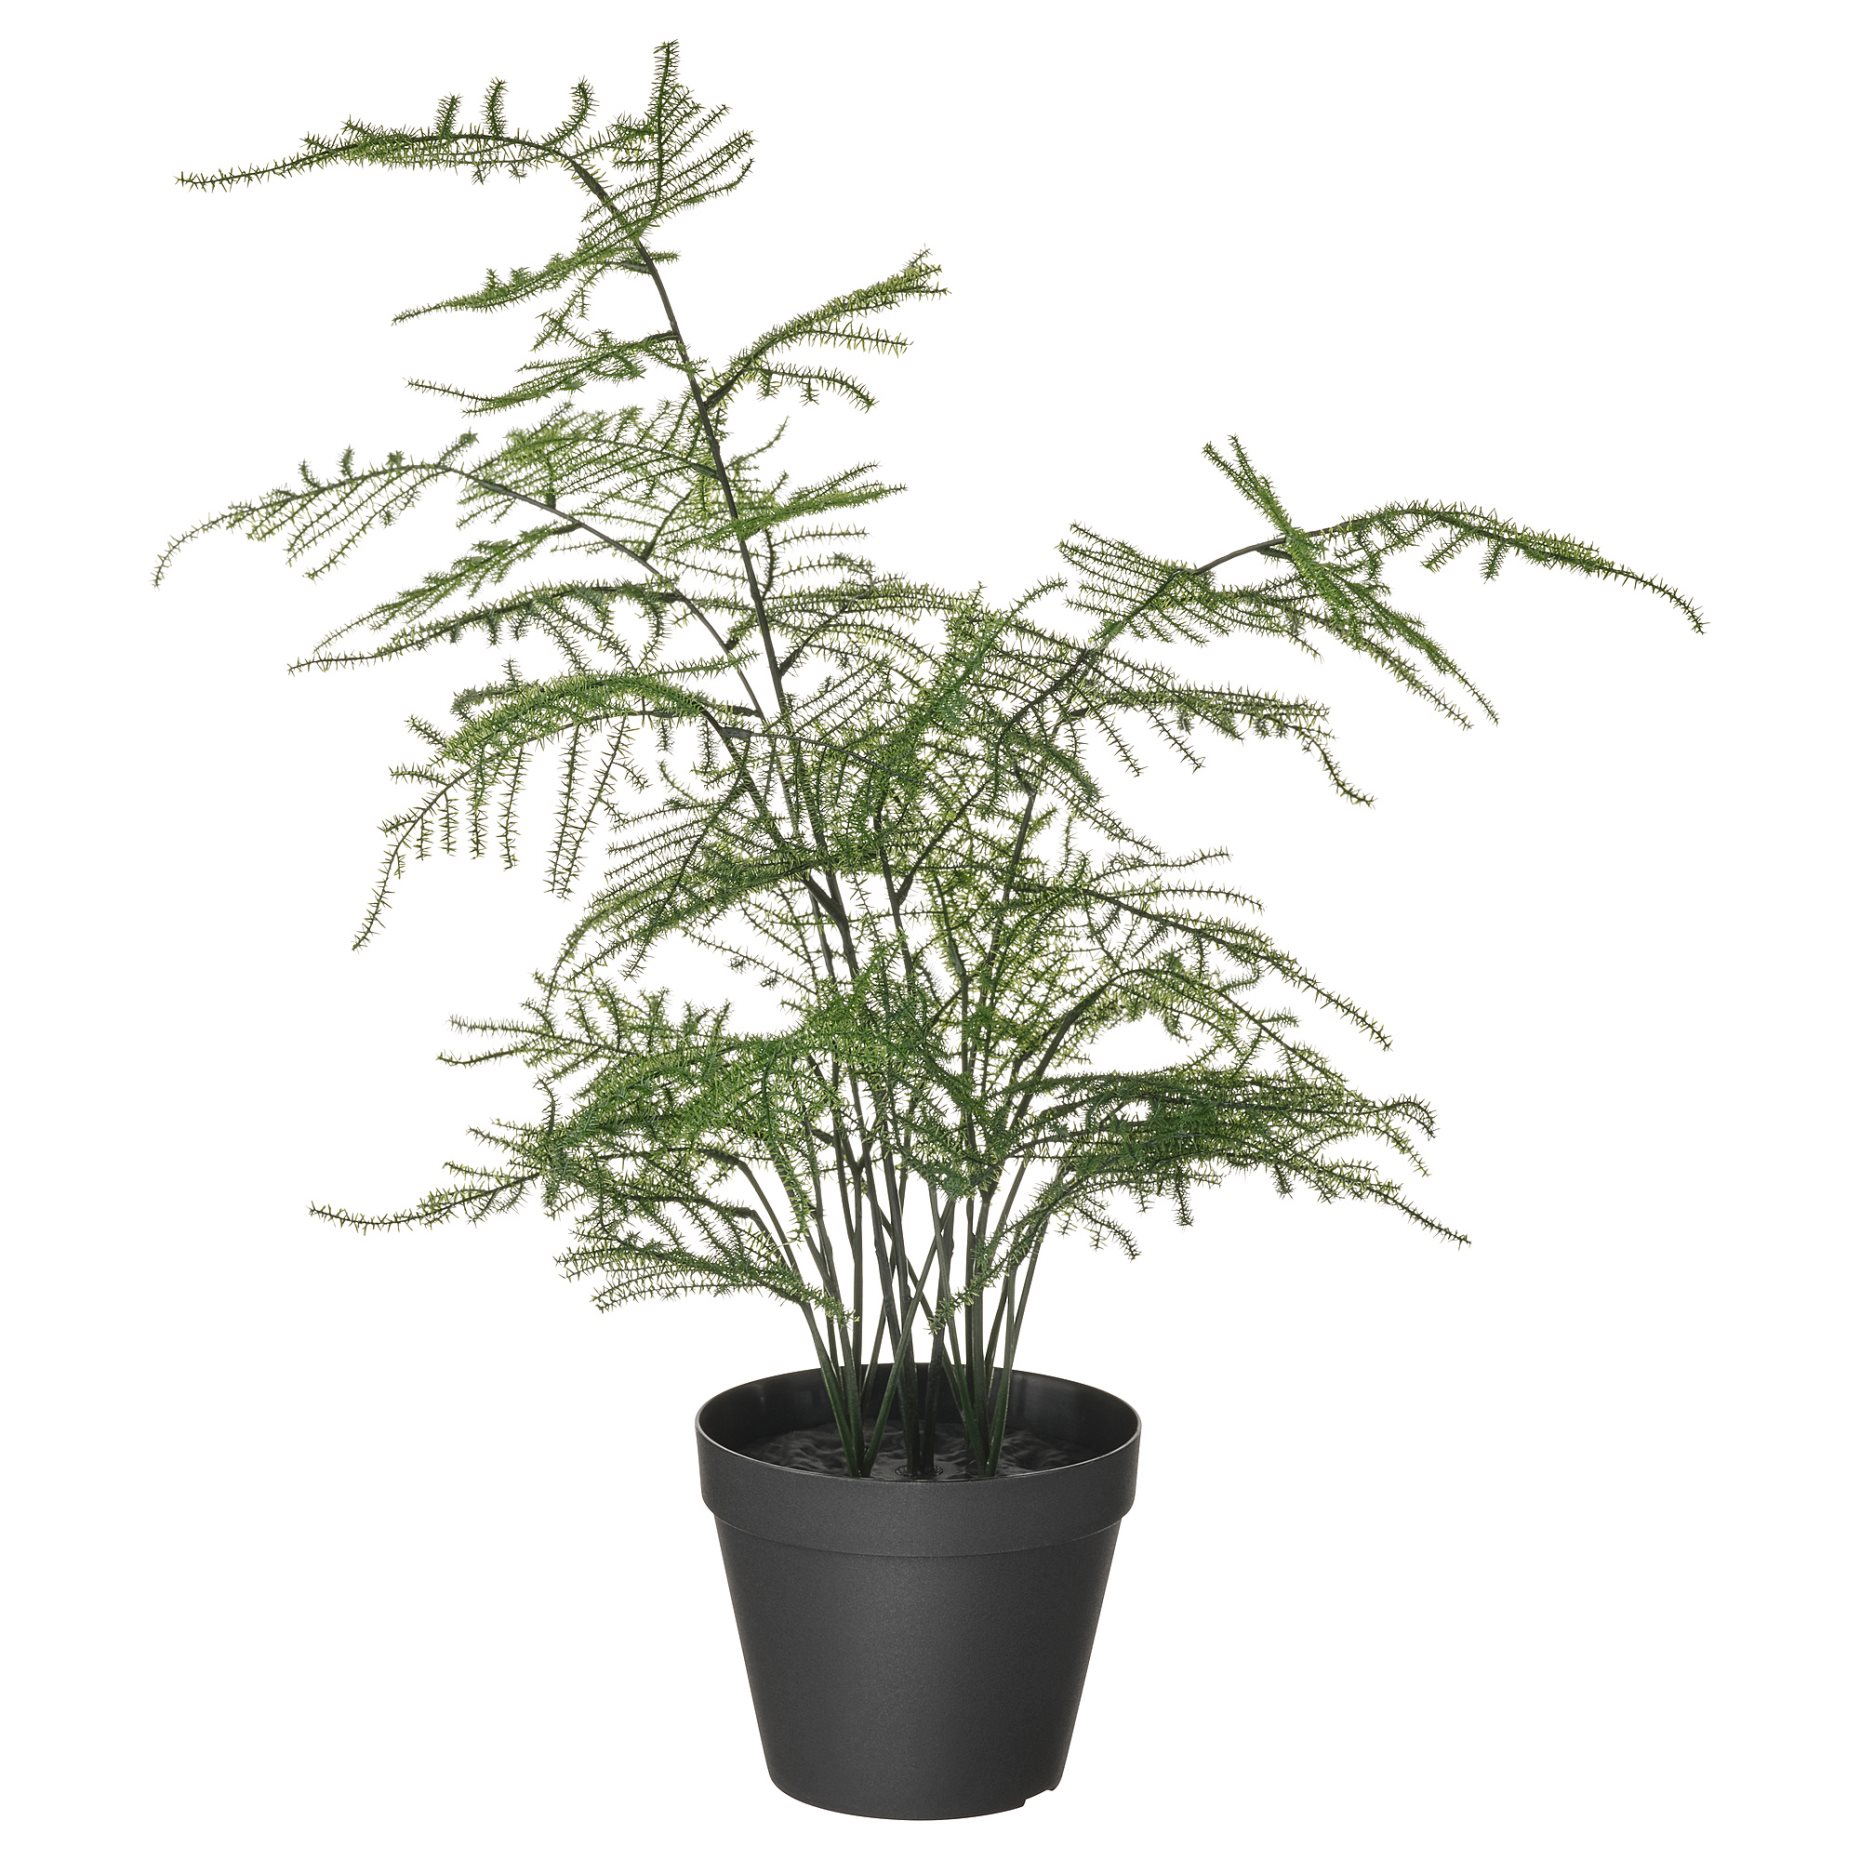 FEJKA, τεχνητό φυτό σε γλάστρα εσωτερικού/εξωτερικού χώρου/Σπαράγγι, 12 cm, 105.229.85